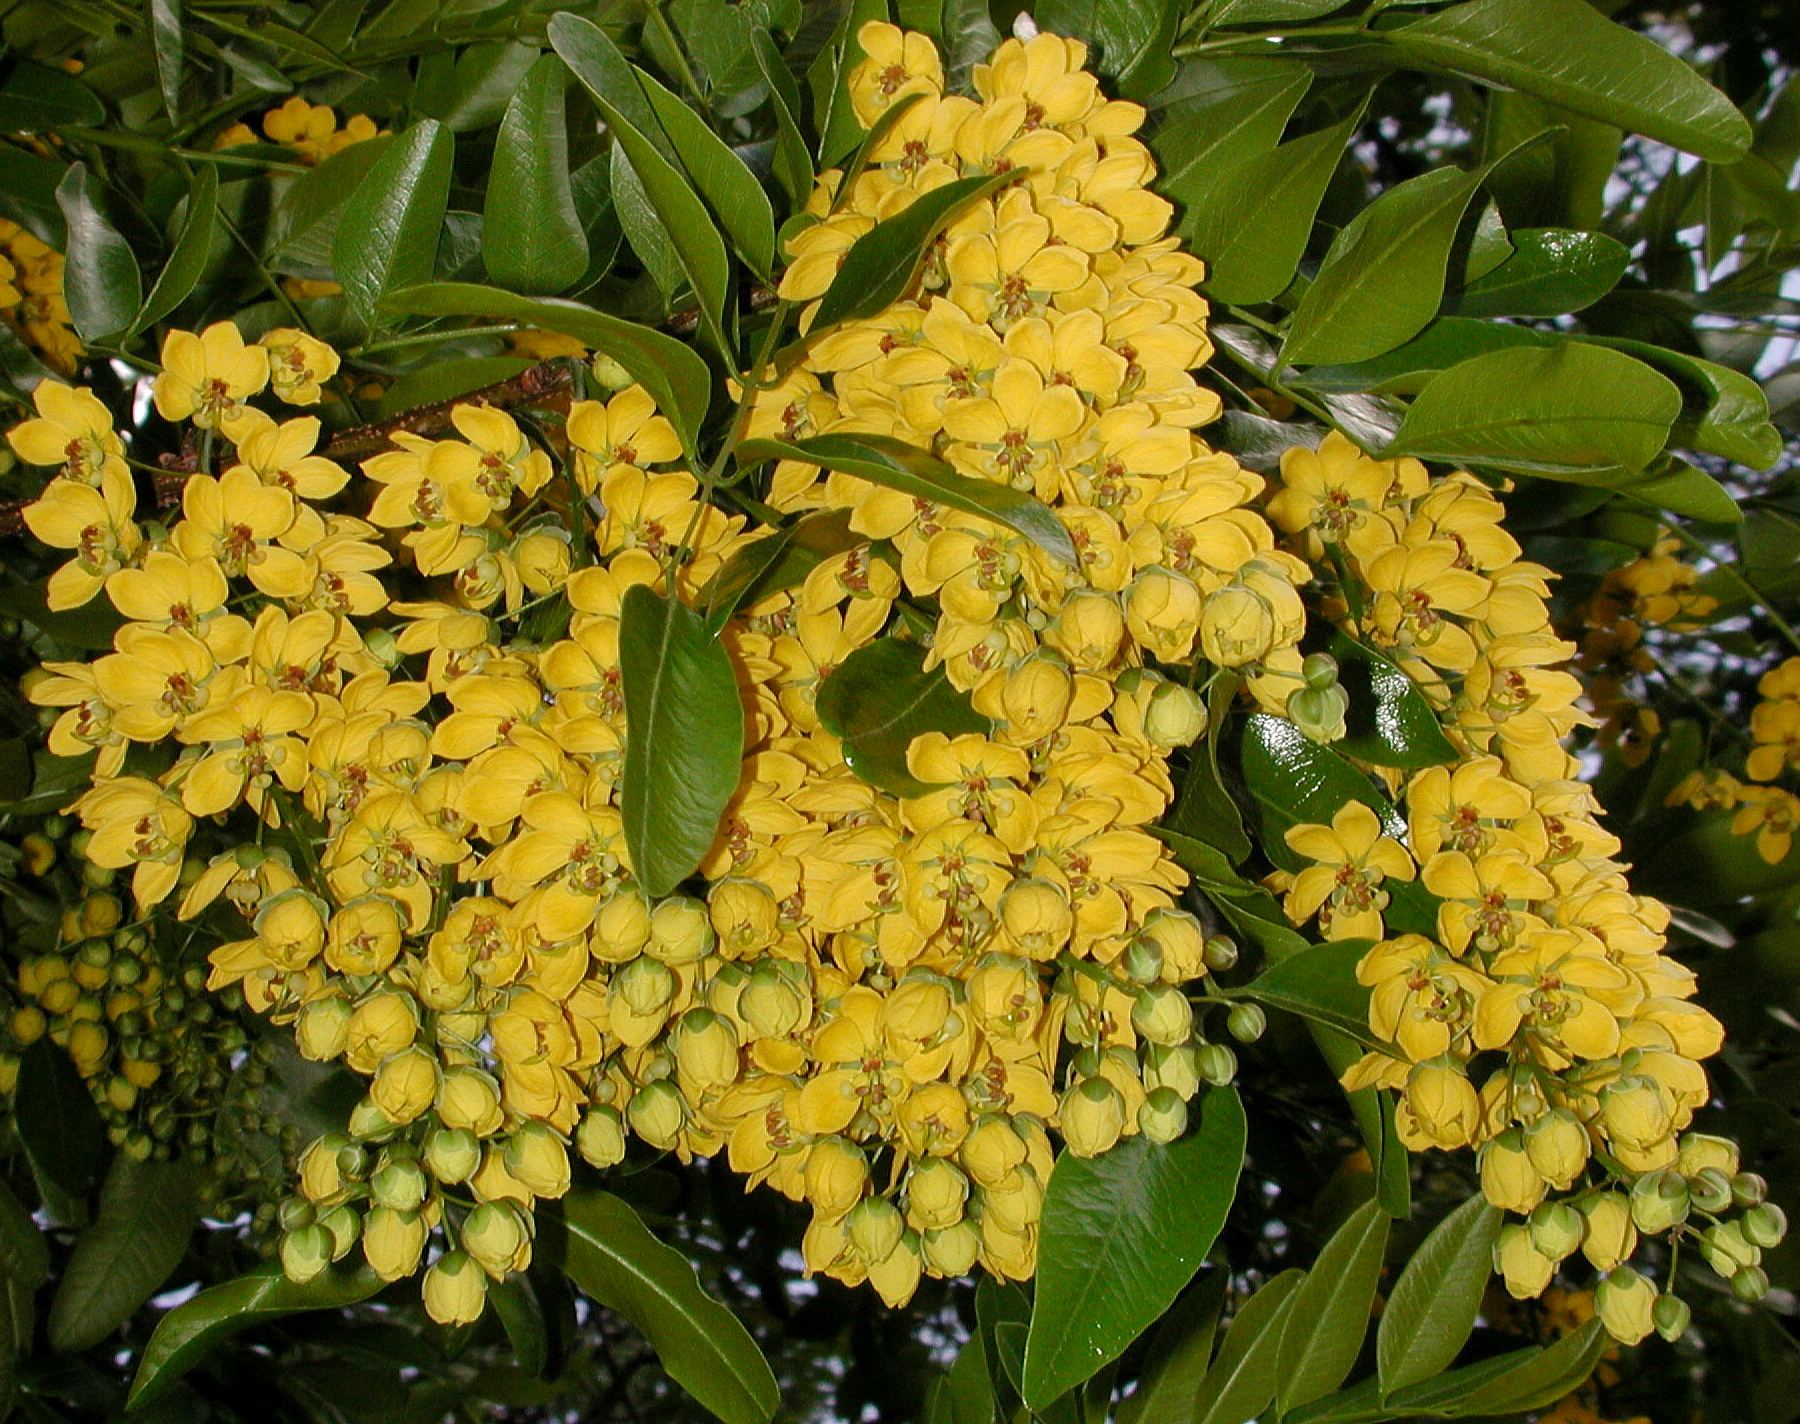 Cassia brewsteri marksiana